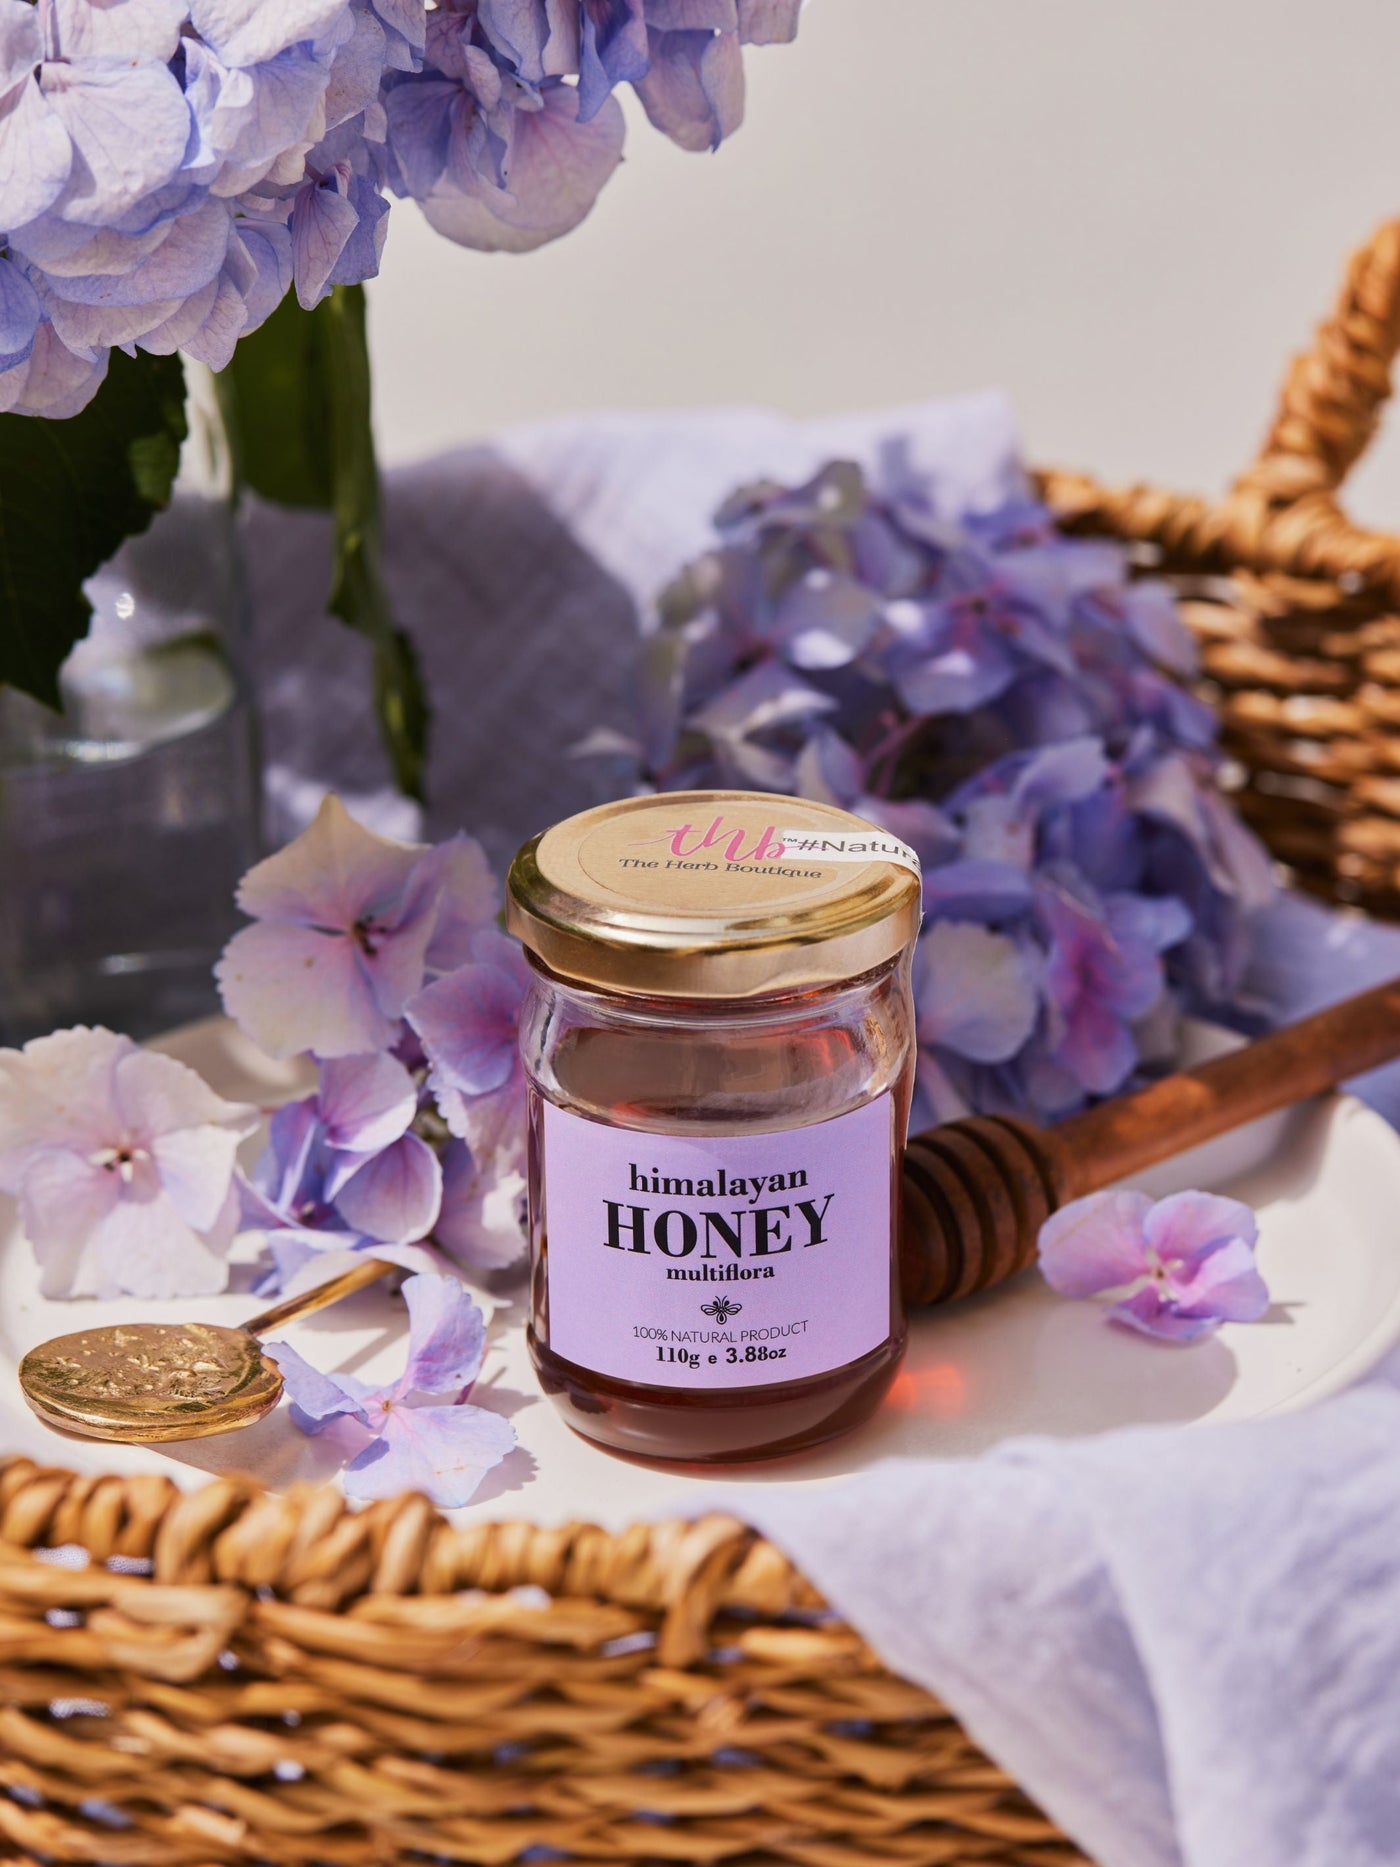 Himalayan Multiflora Honey